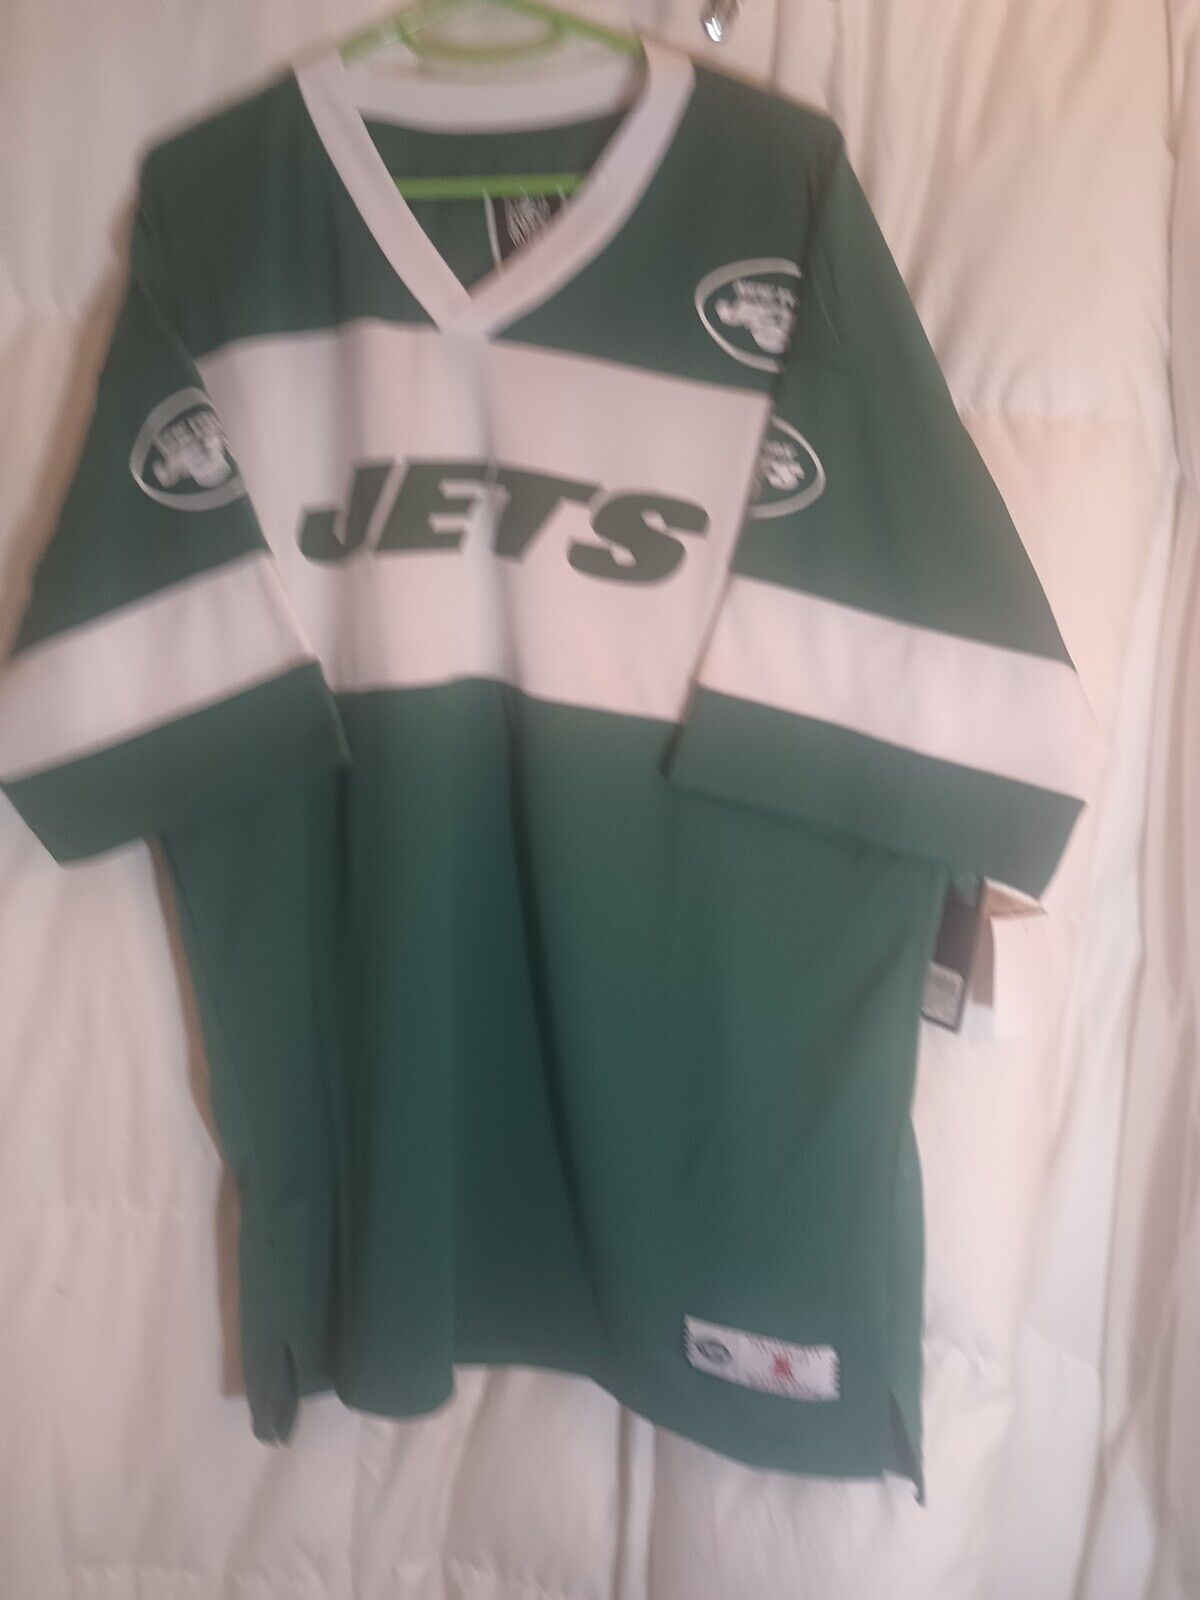 NWT NFL New York Jets Jersey Size XL Green /White Knit Jersey